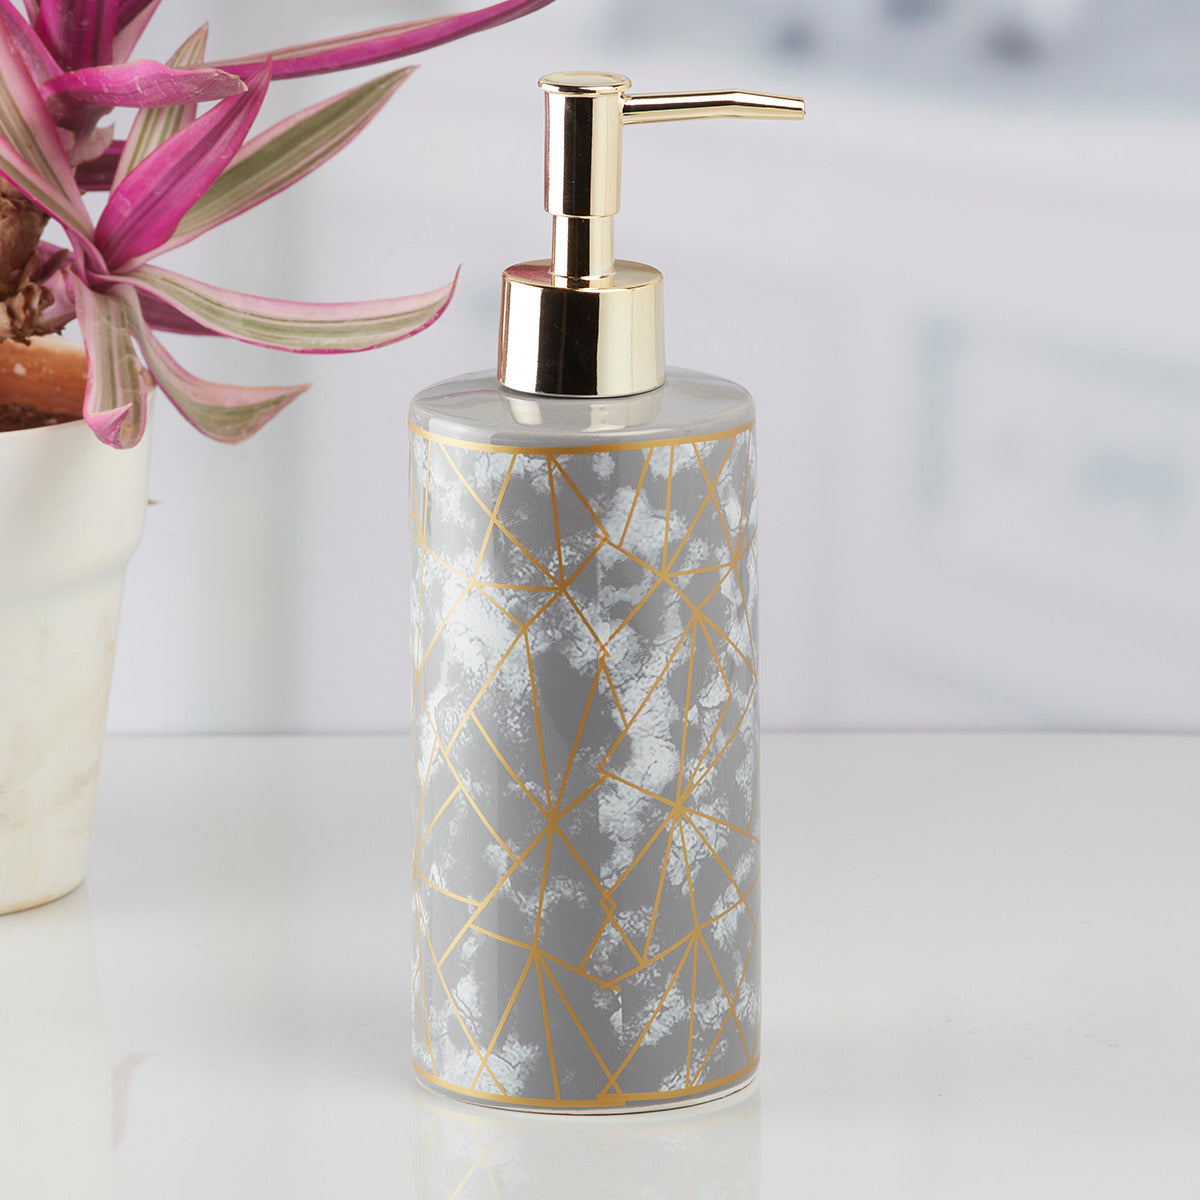 Ceramic Soap Dispenser handwash Pump for Bathroom, Set of 1, Grey/Gold (10211)